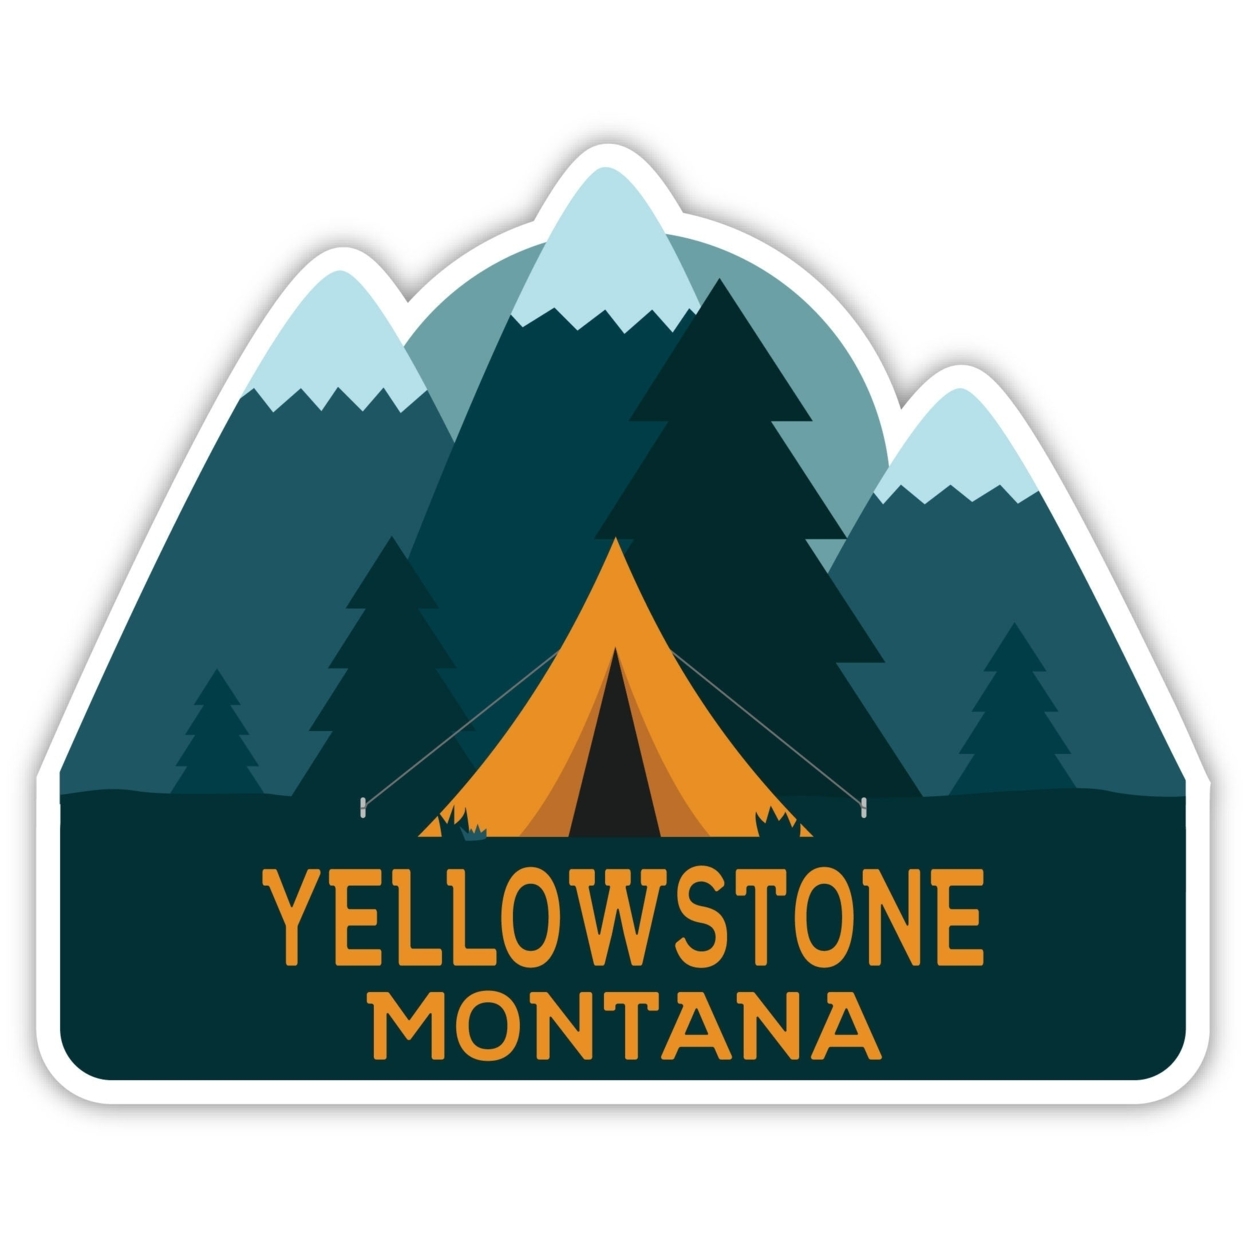 Yellowstone Montana Souvenir Decorative Stickers (Choose Theme And Size) - Single Unit, 2-Inch, Tent